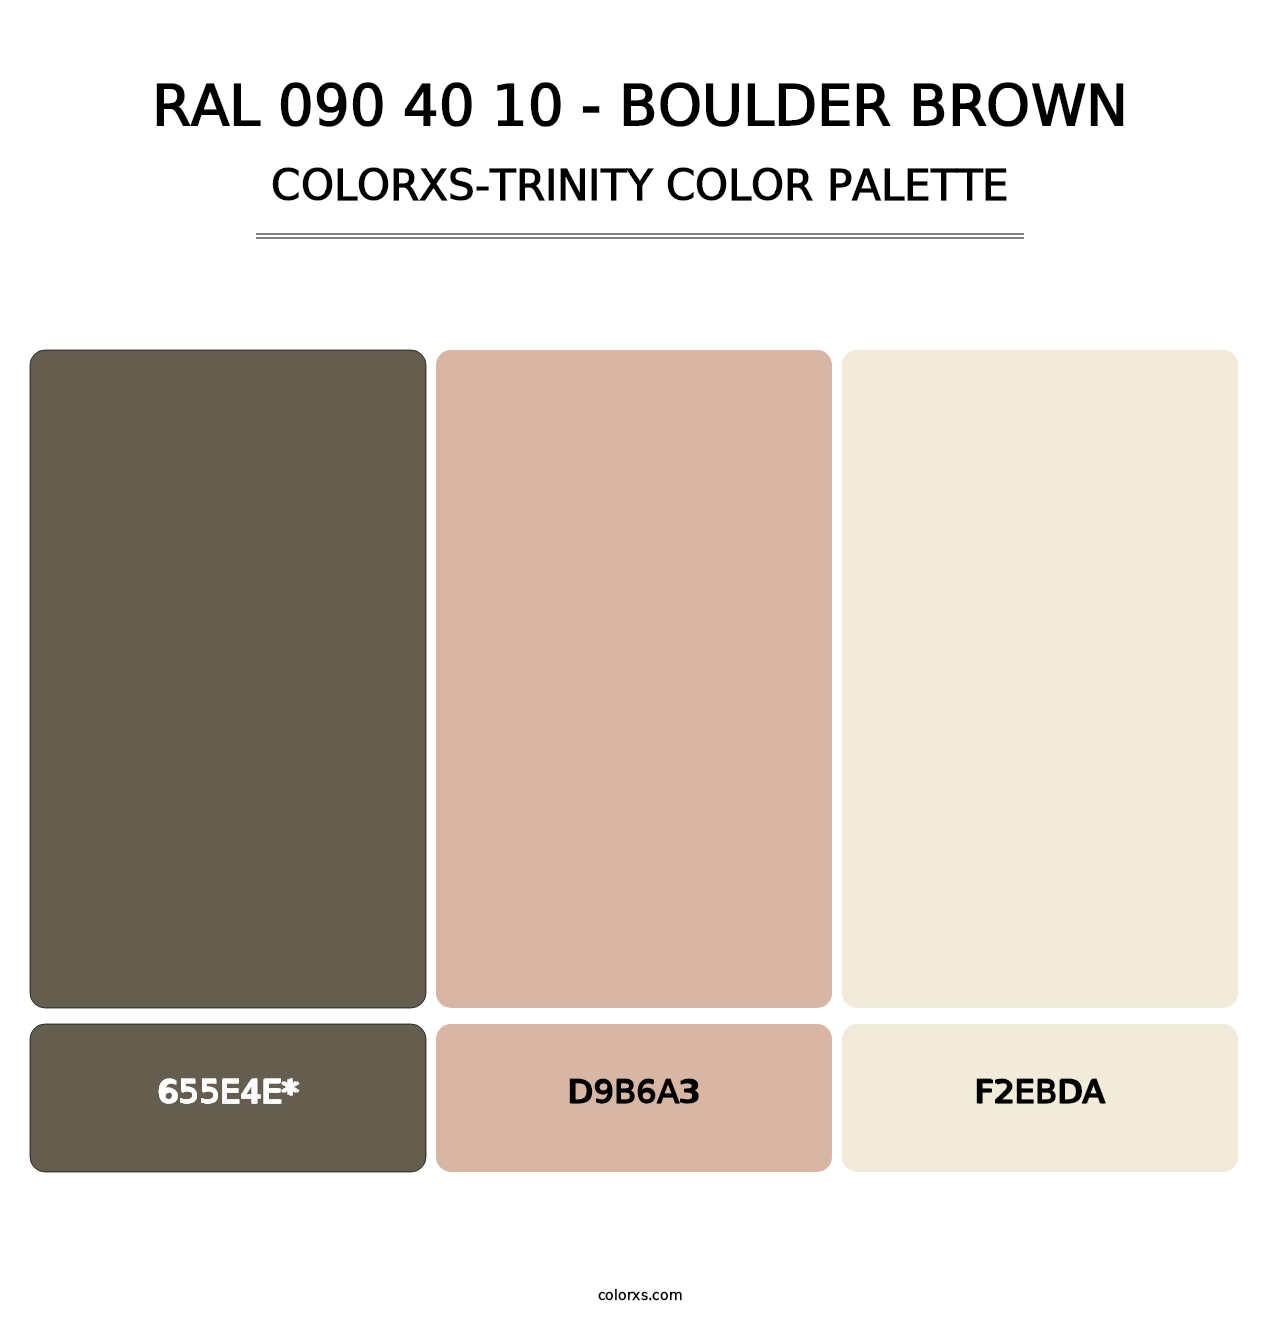 RAL 090 40 10 - Boulder Brown - Colorxs Trinity Palette